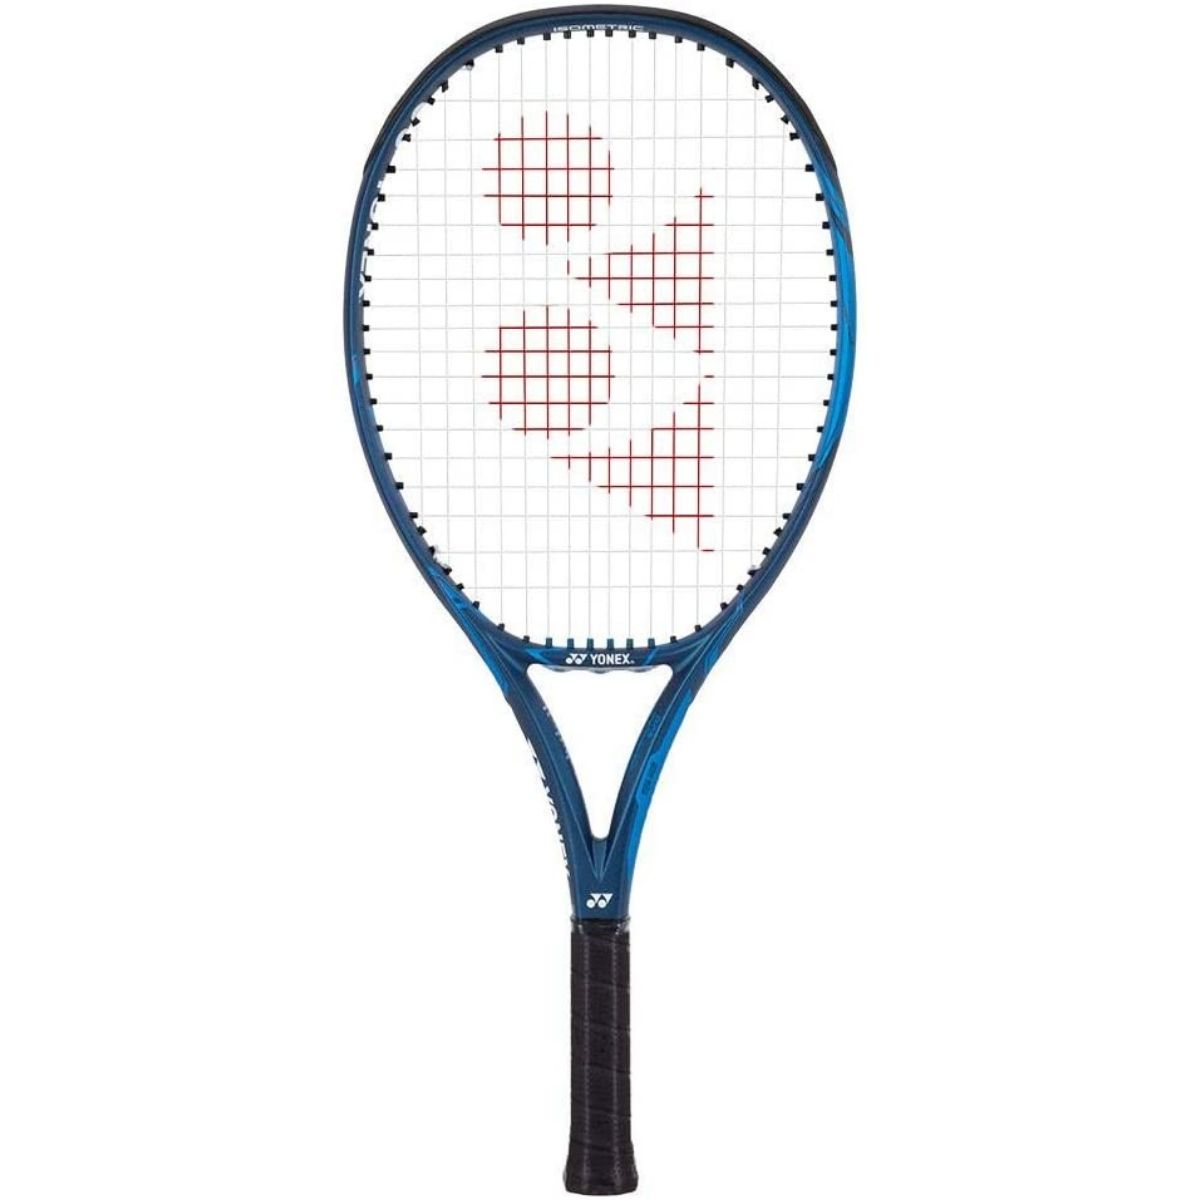 The Best 26 inch Tennis Rackets Options: YONEX Junior EZONE